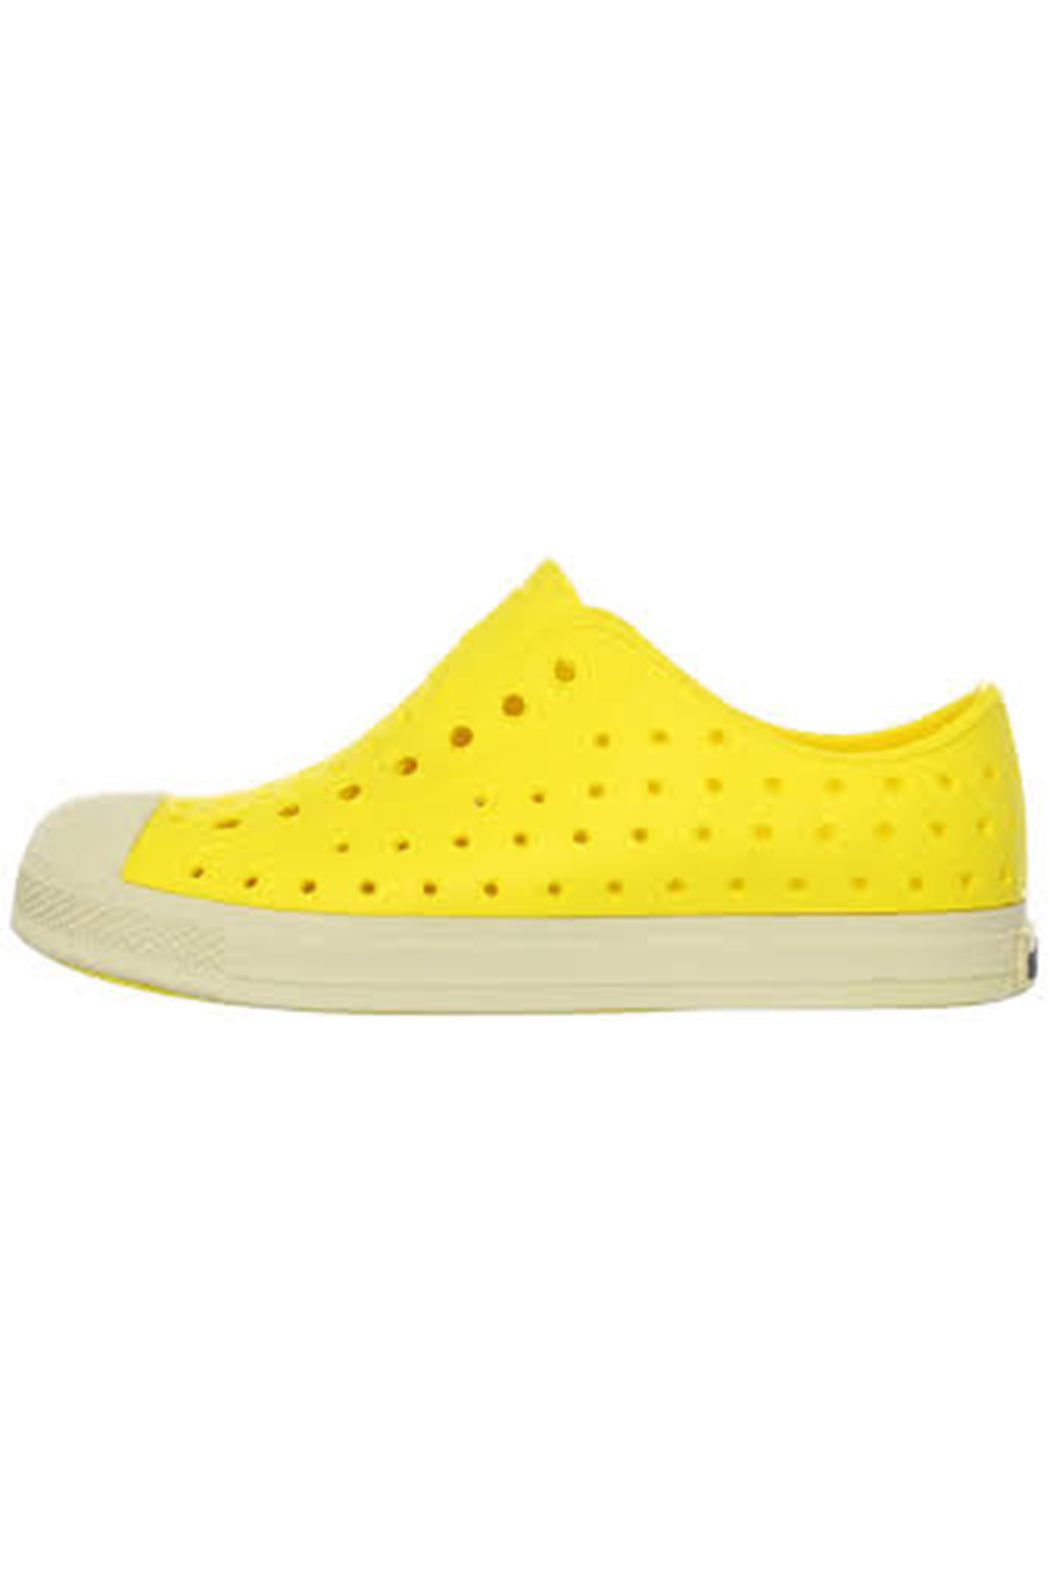 Native Jefferson Little Kid Shoes - Crayon Yellow/Shell White